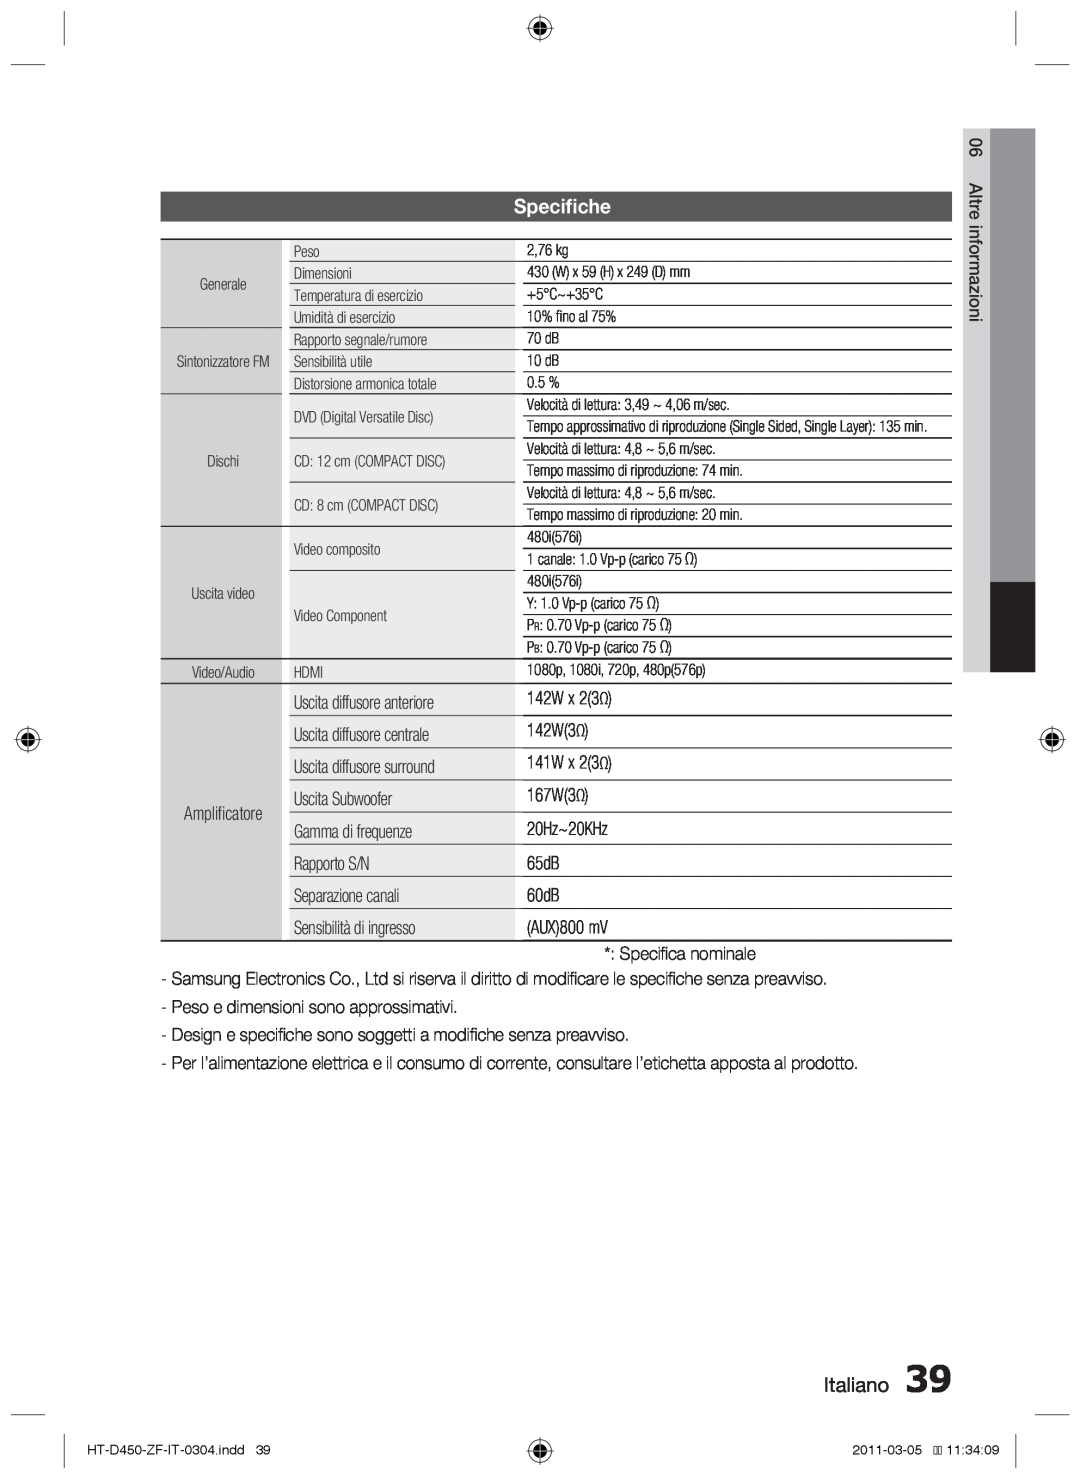 Samsung HT-D450, HT-D455, HT-D453 user manual Specifiche, Italiano 